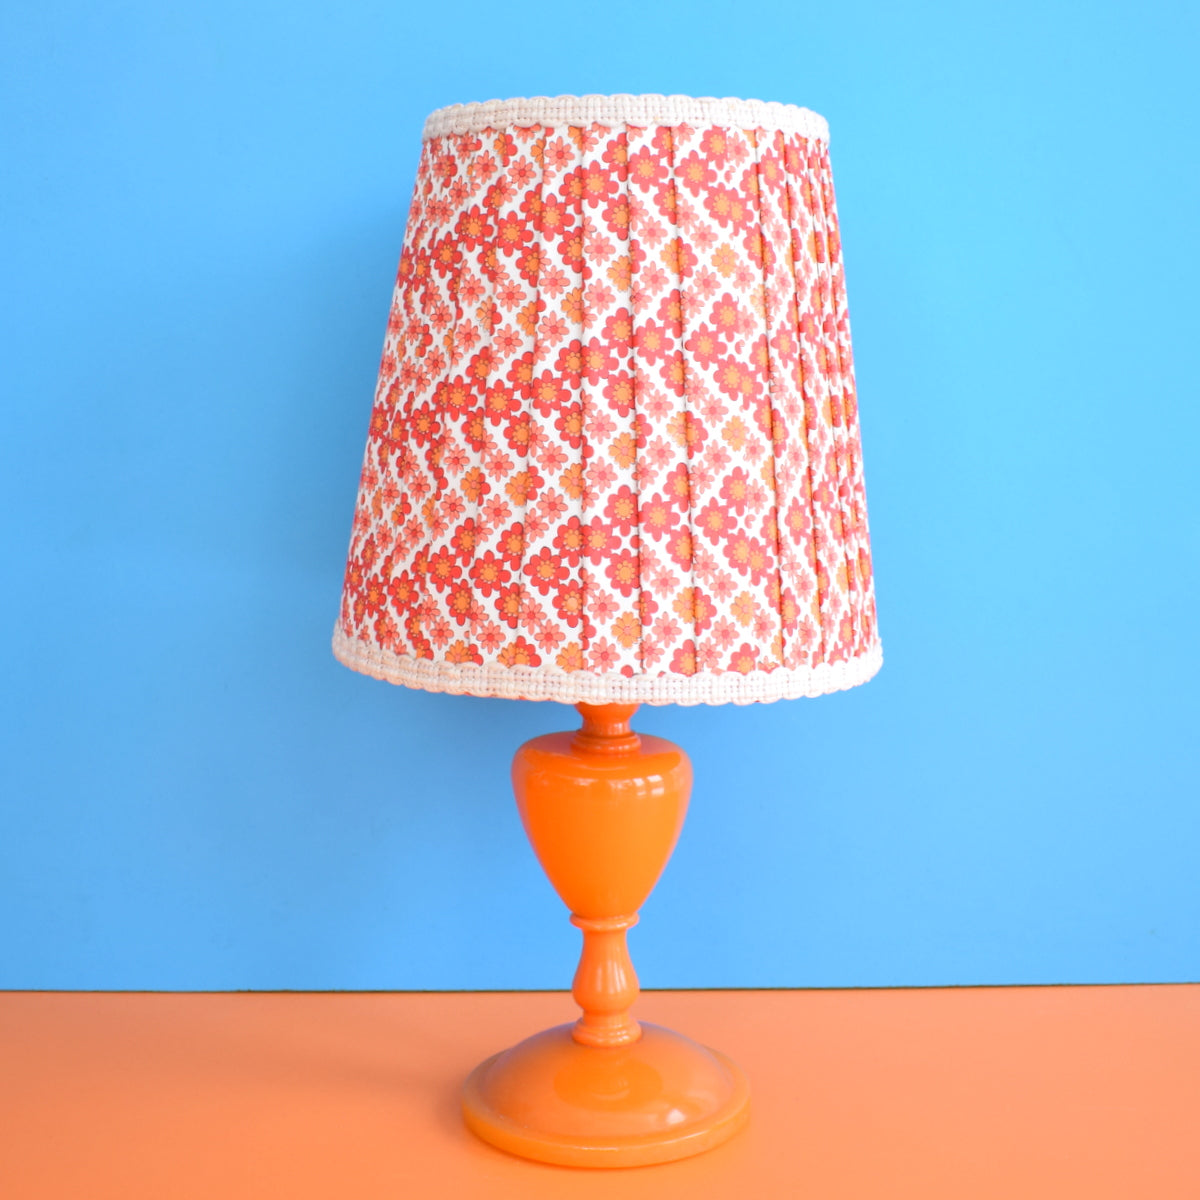 Vintage 1960s Small Orange Table Lamp - Original Flower Power Vinyl Shade, Pink & Orange